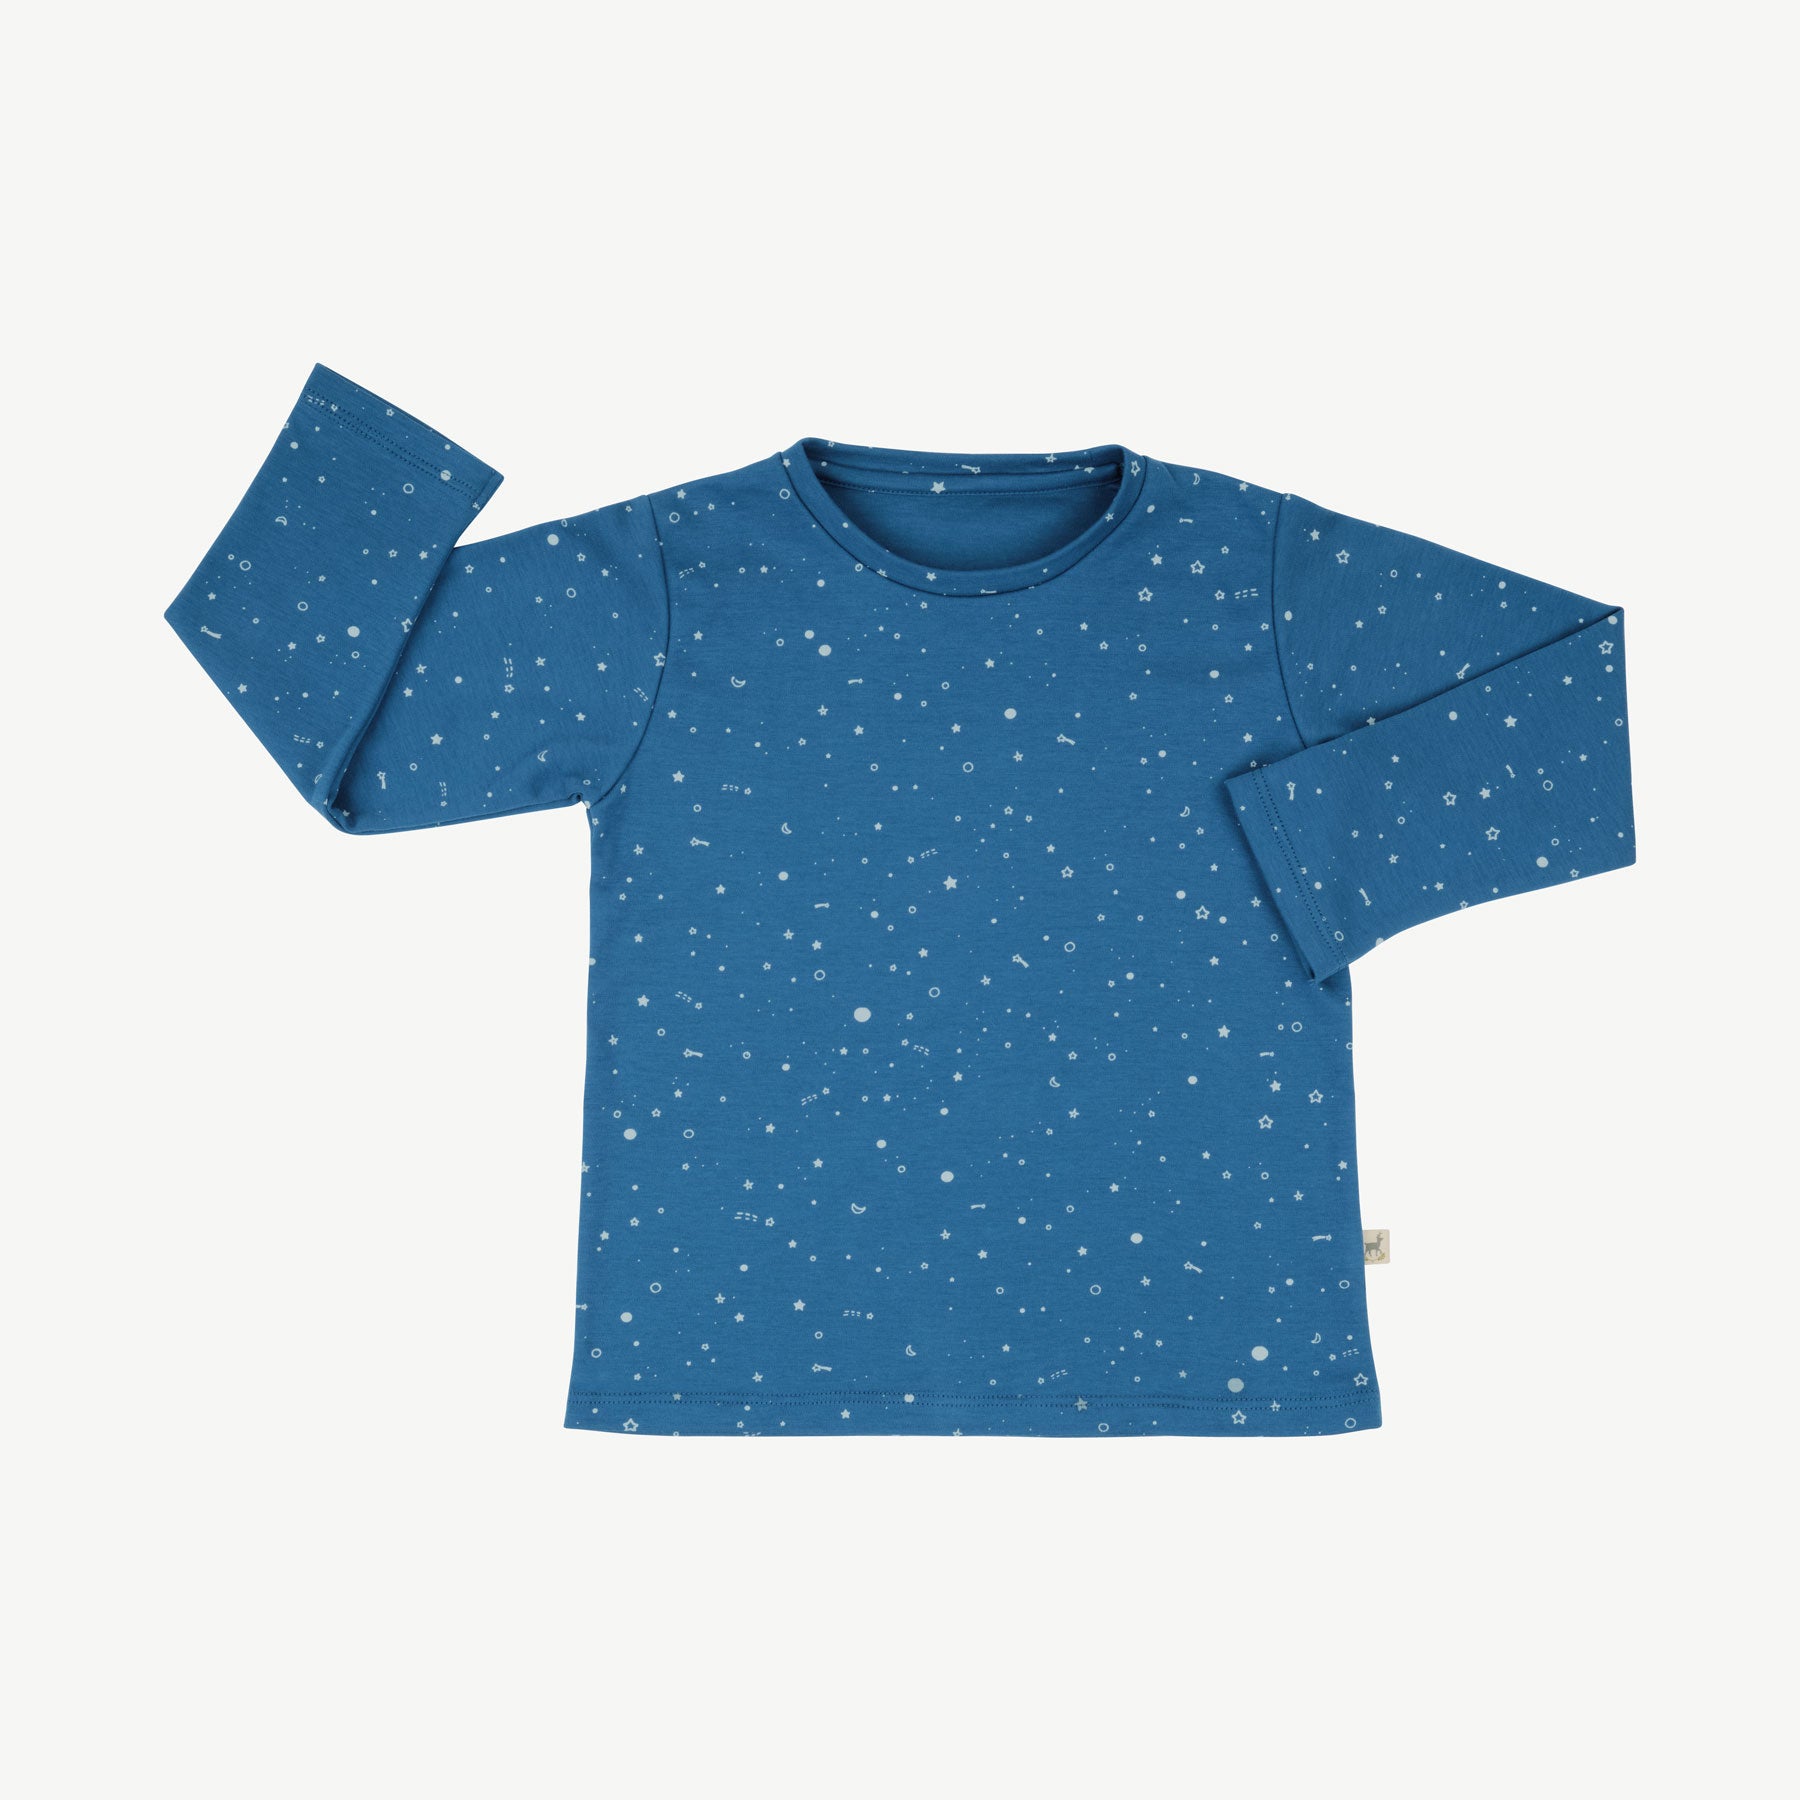 'close to the stars' dark blue t-shirt